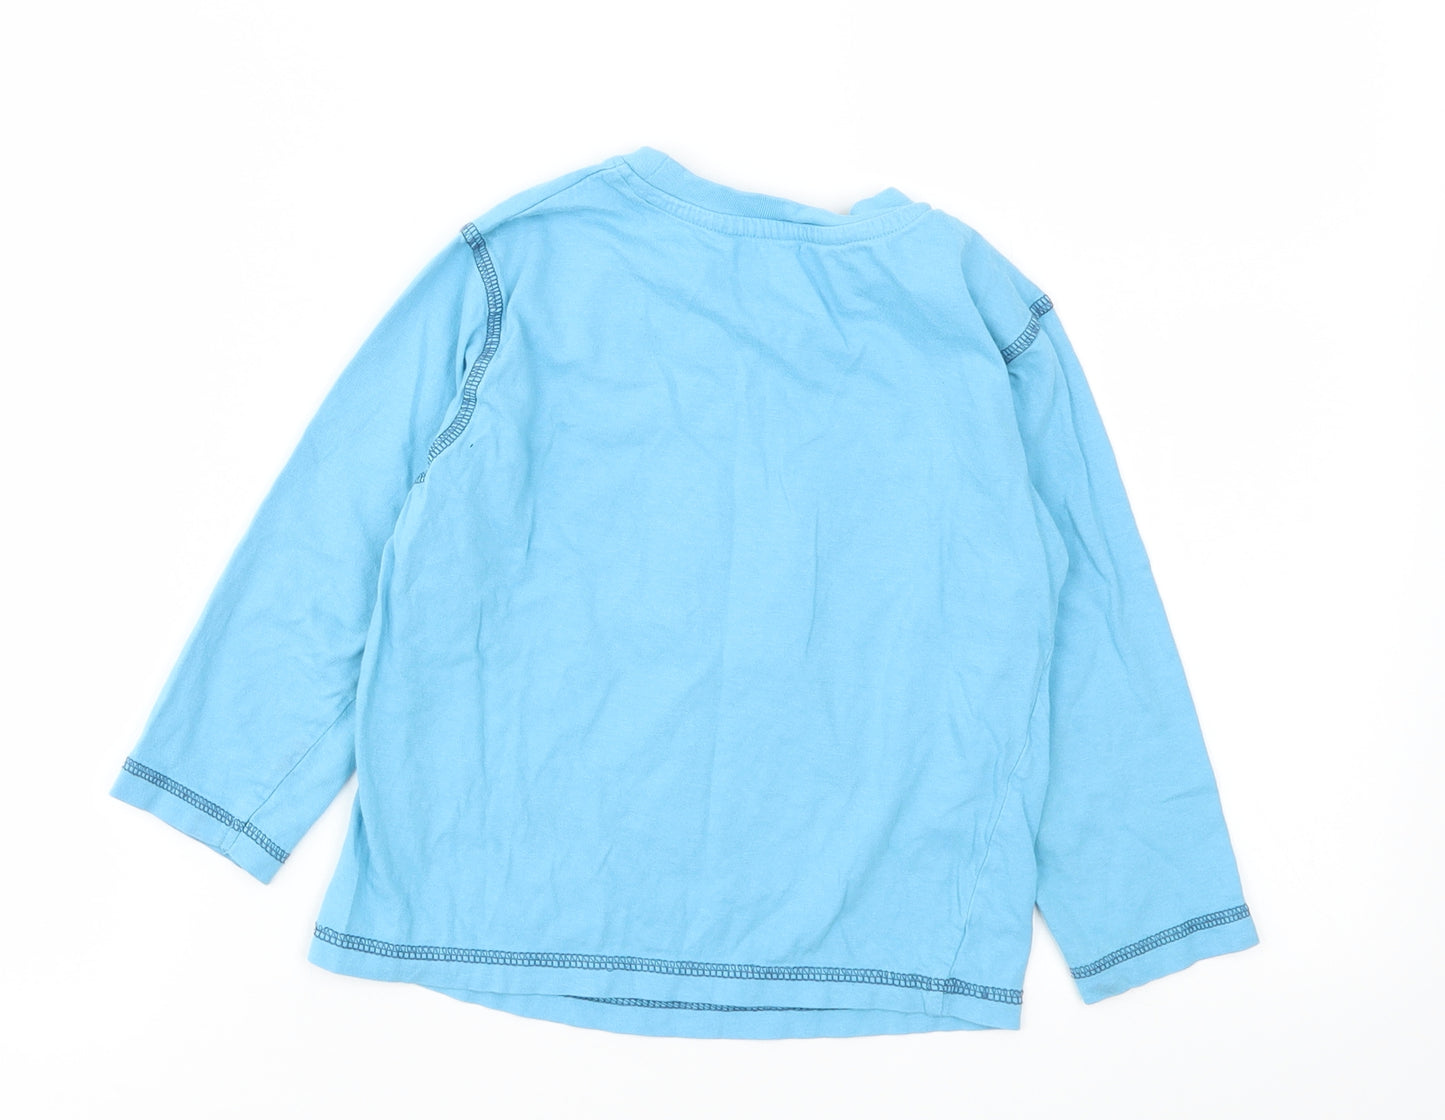 Preworn Boys Blue Solid   Pyjama Top Size 4-5 Years